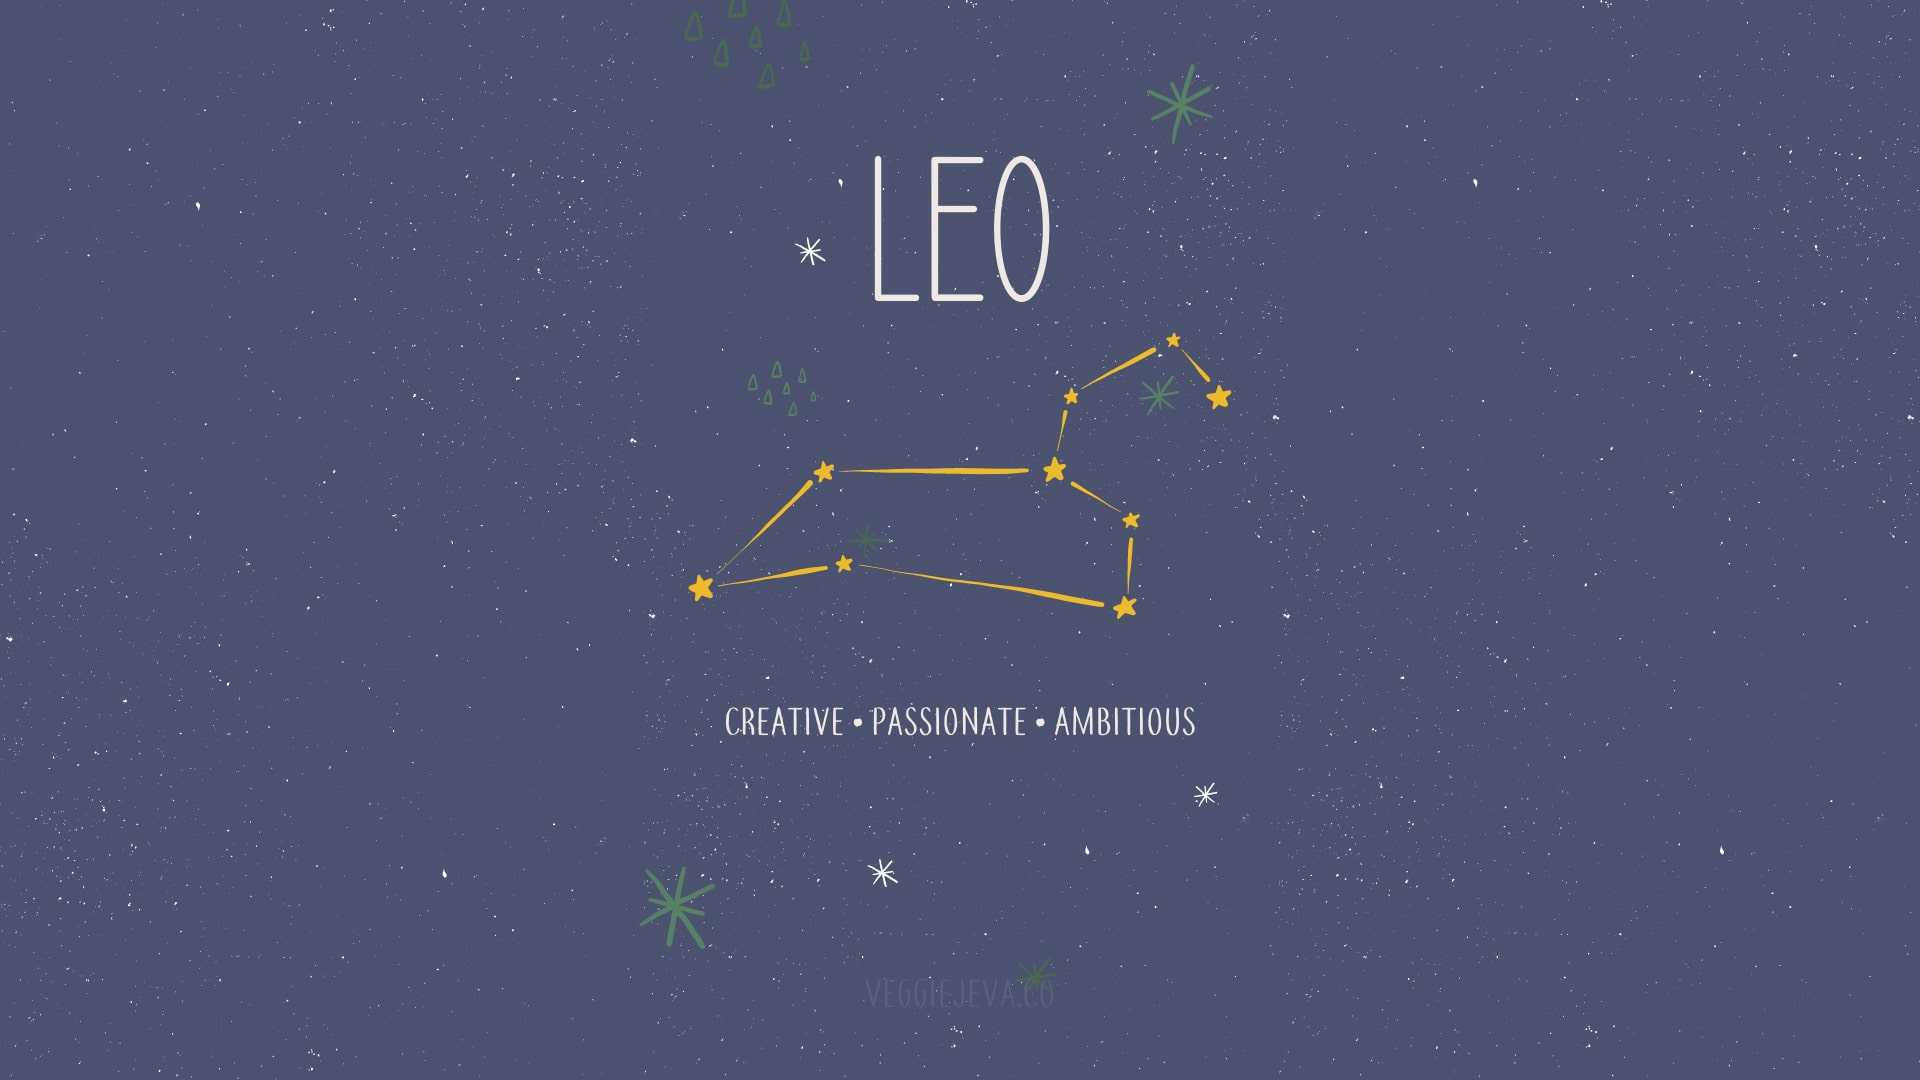 Leo Constellation And Qualities